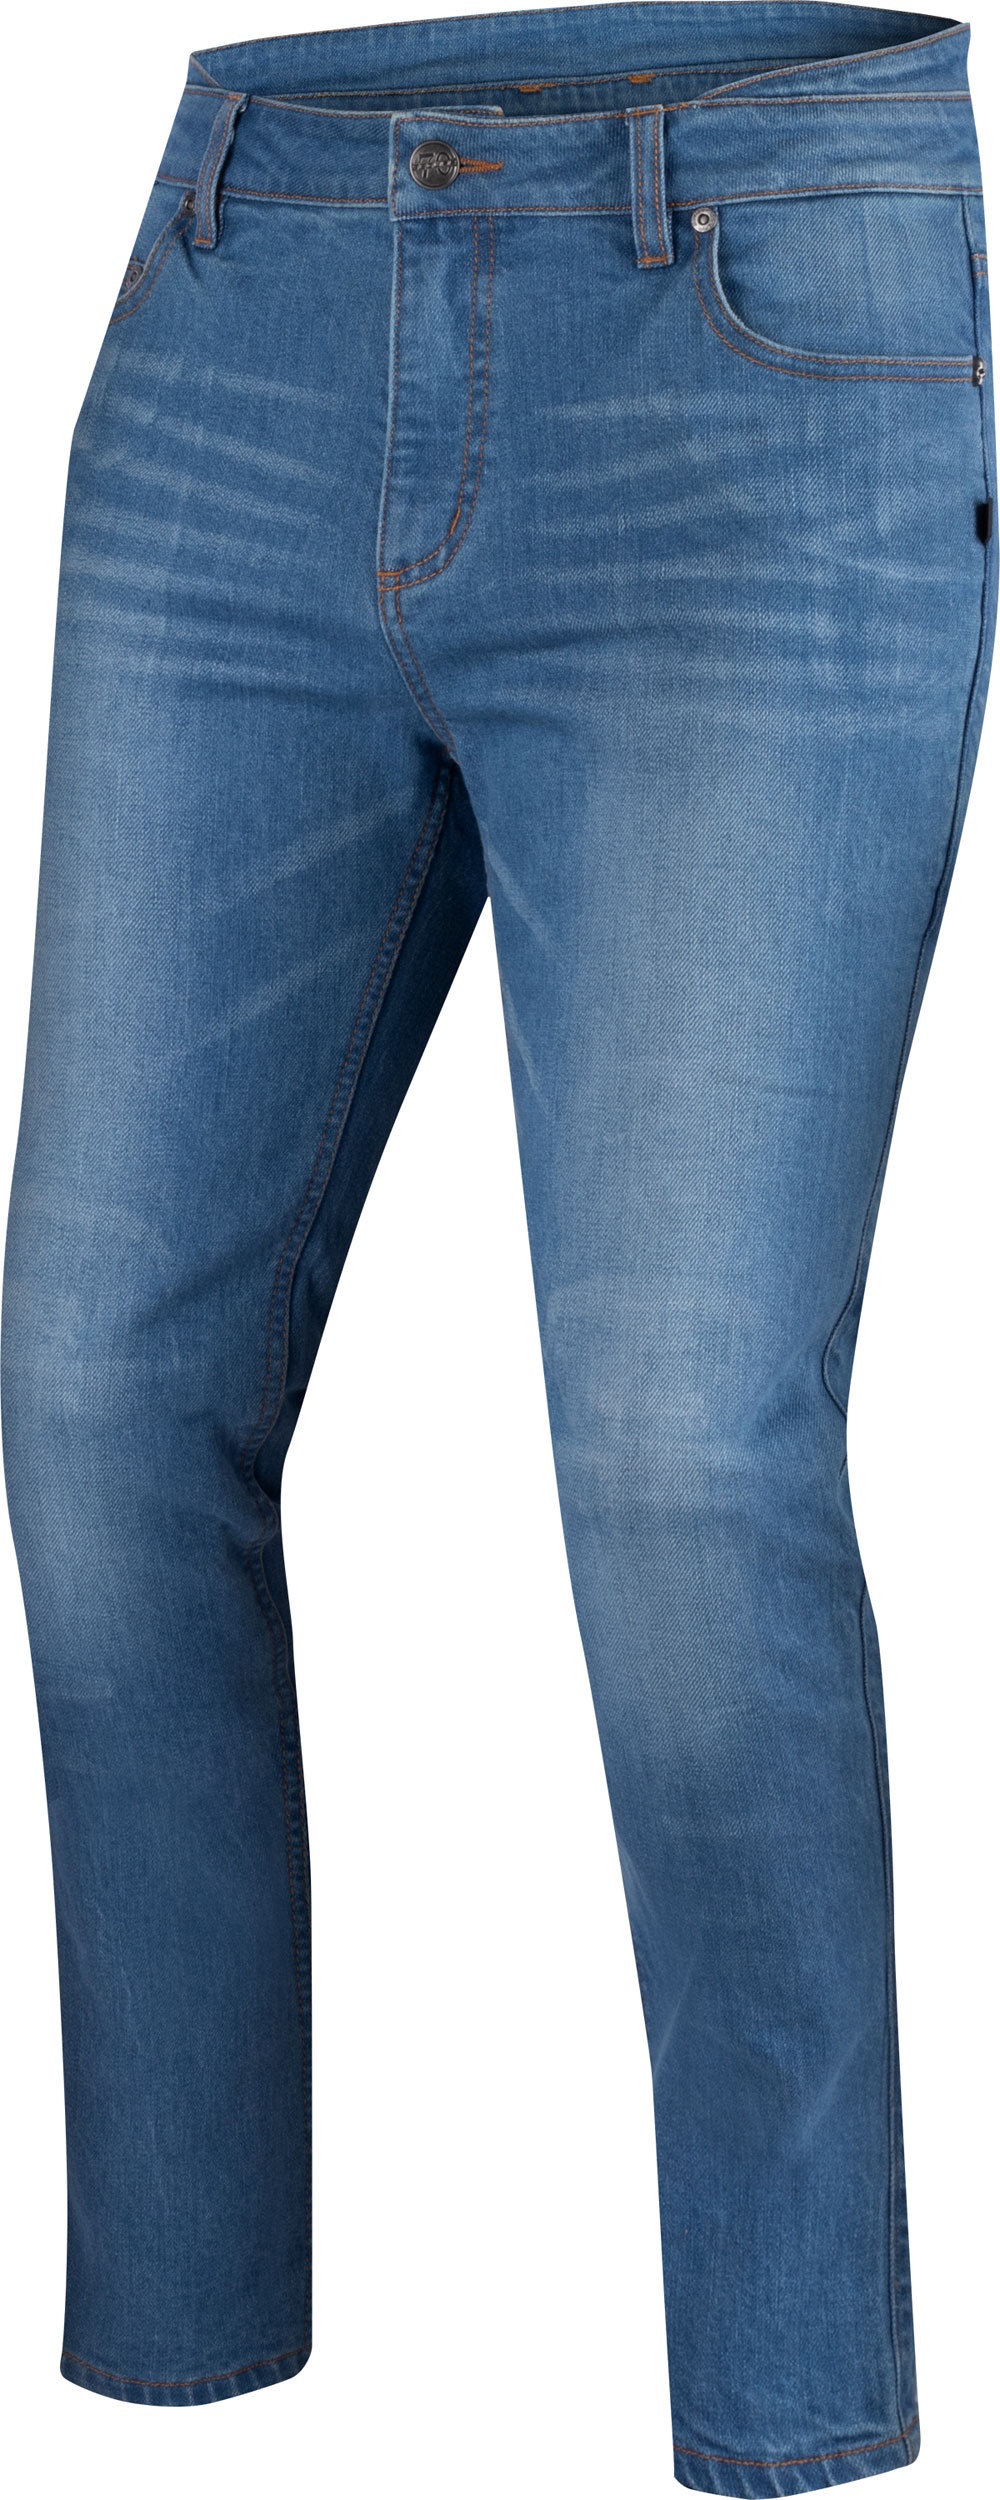 Segura Rosco, jeans - Bleu - XL